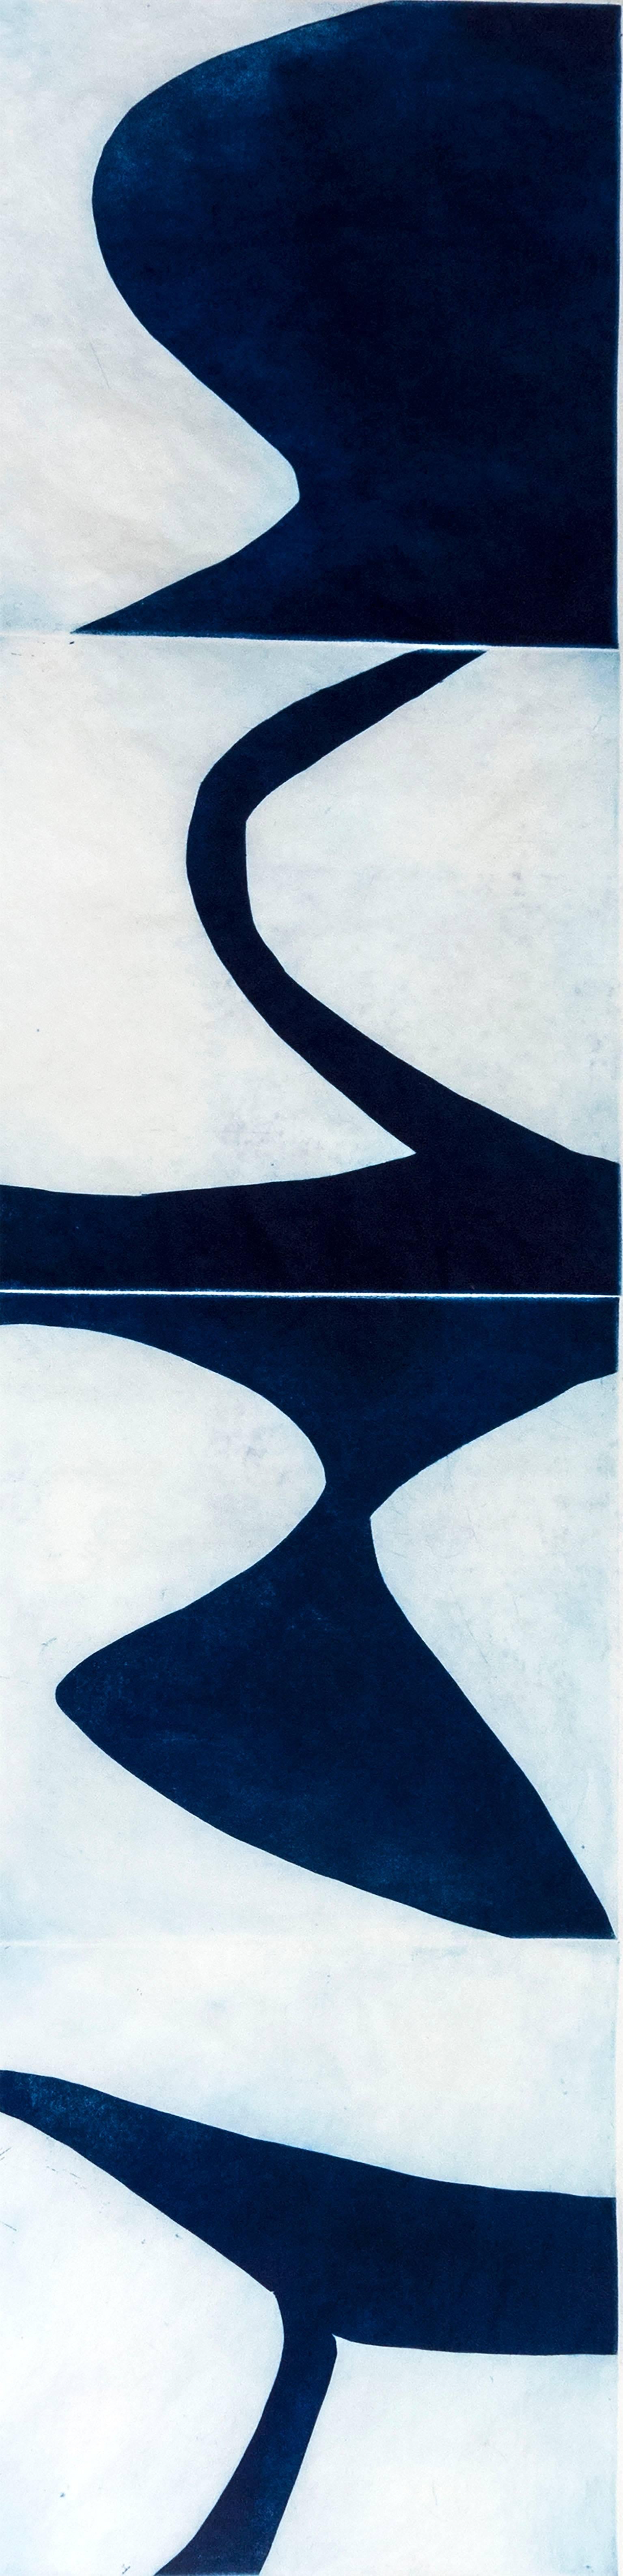 "Prussian Blue 9", graphic modernist scroll-like abstract monoprint, deep blue. - Print by Marina Adams